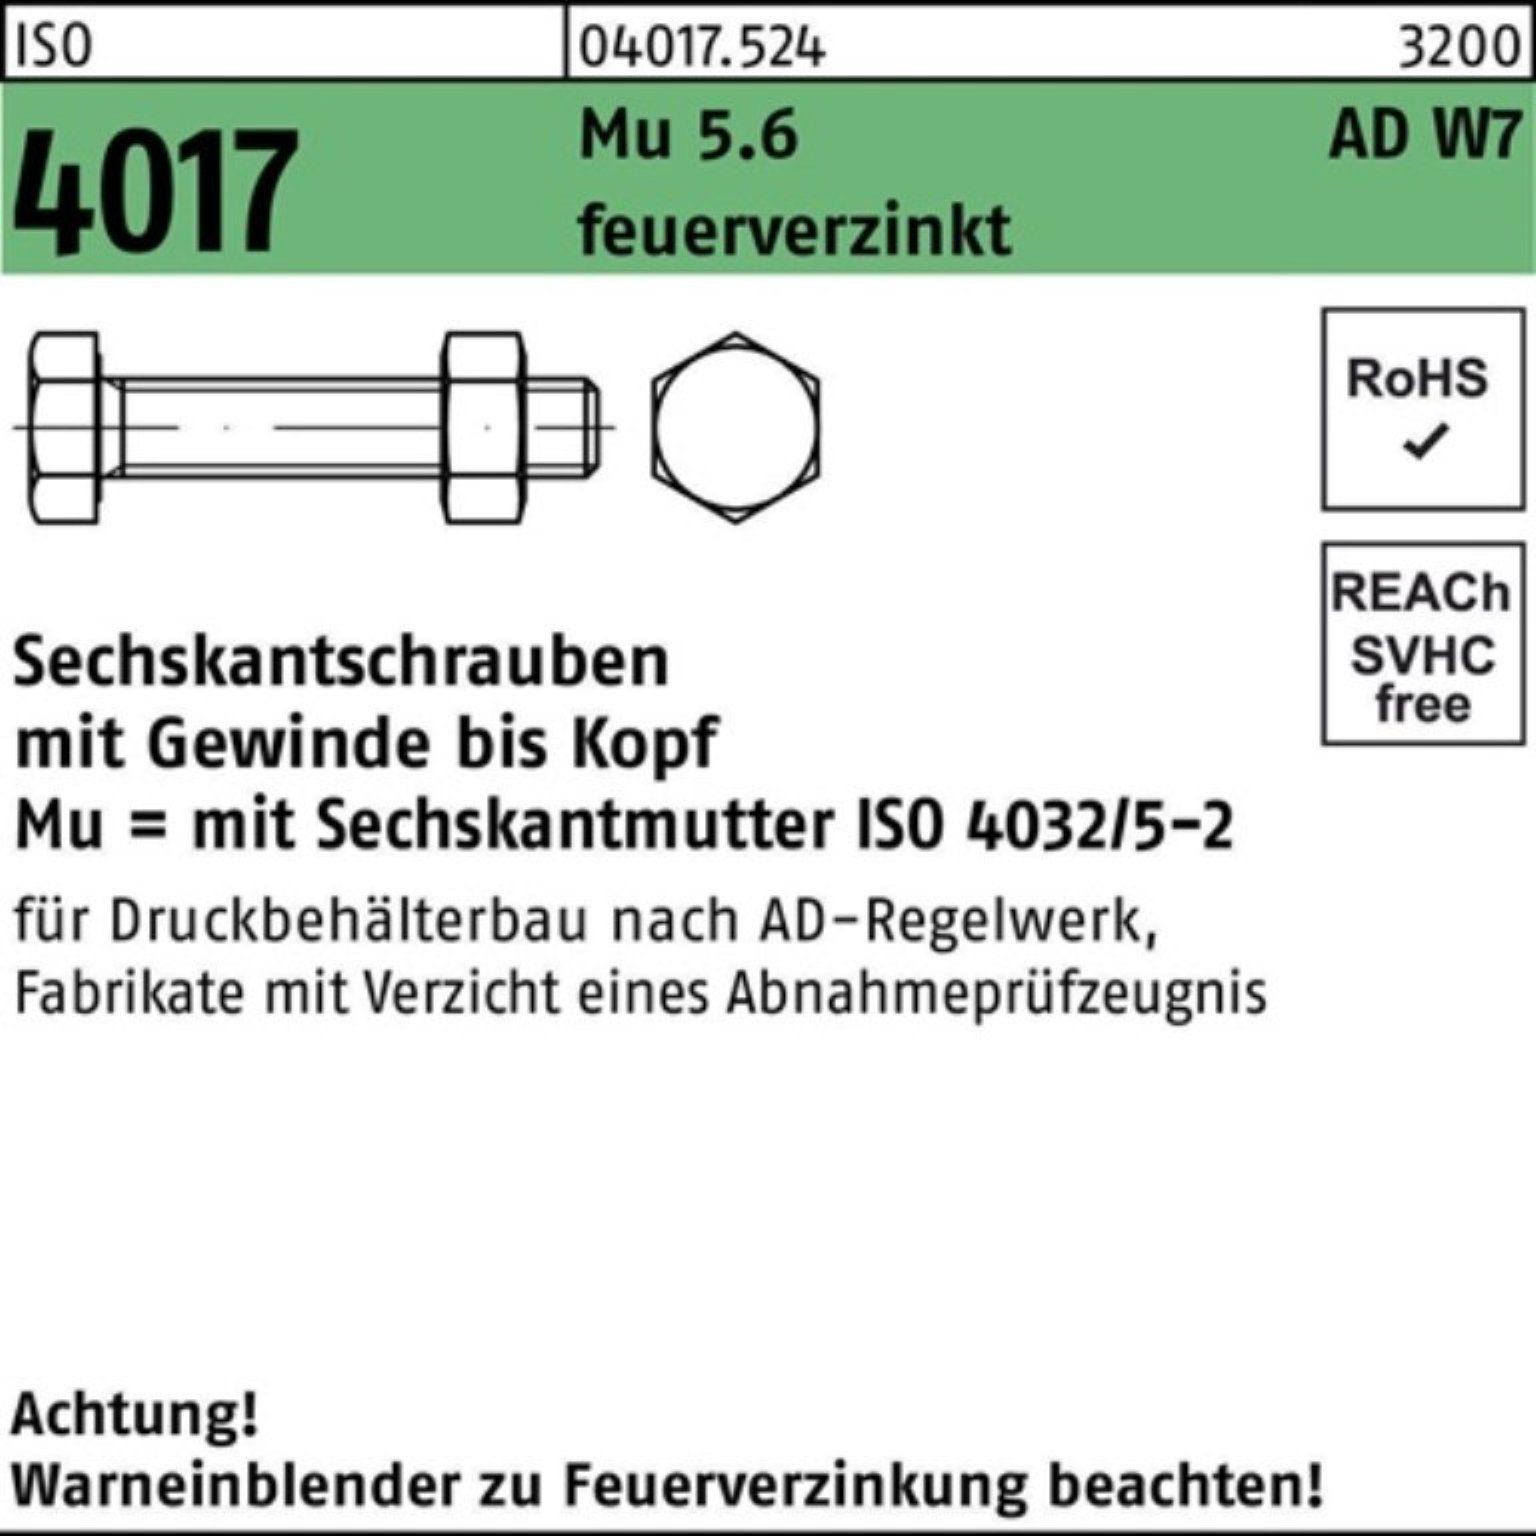 Bufab Sechskantschraube Sechskantschraube Mutter 30 W7 5.6 VG 100er Pack feue M12x 4017 ISO AD